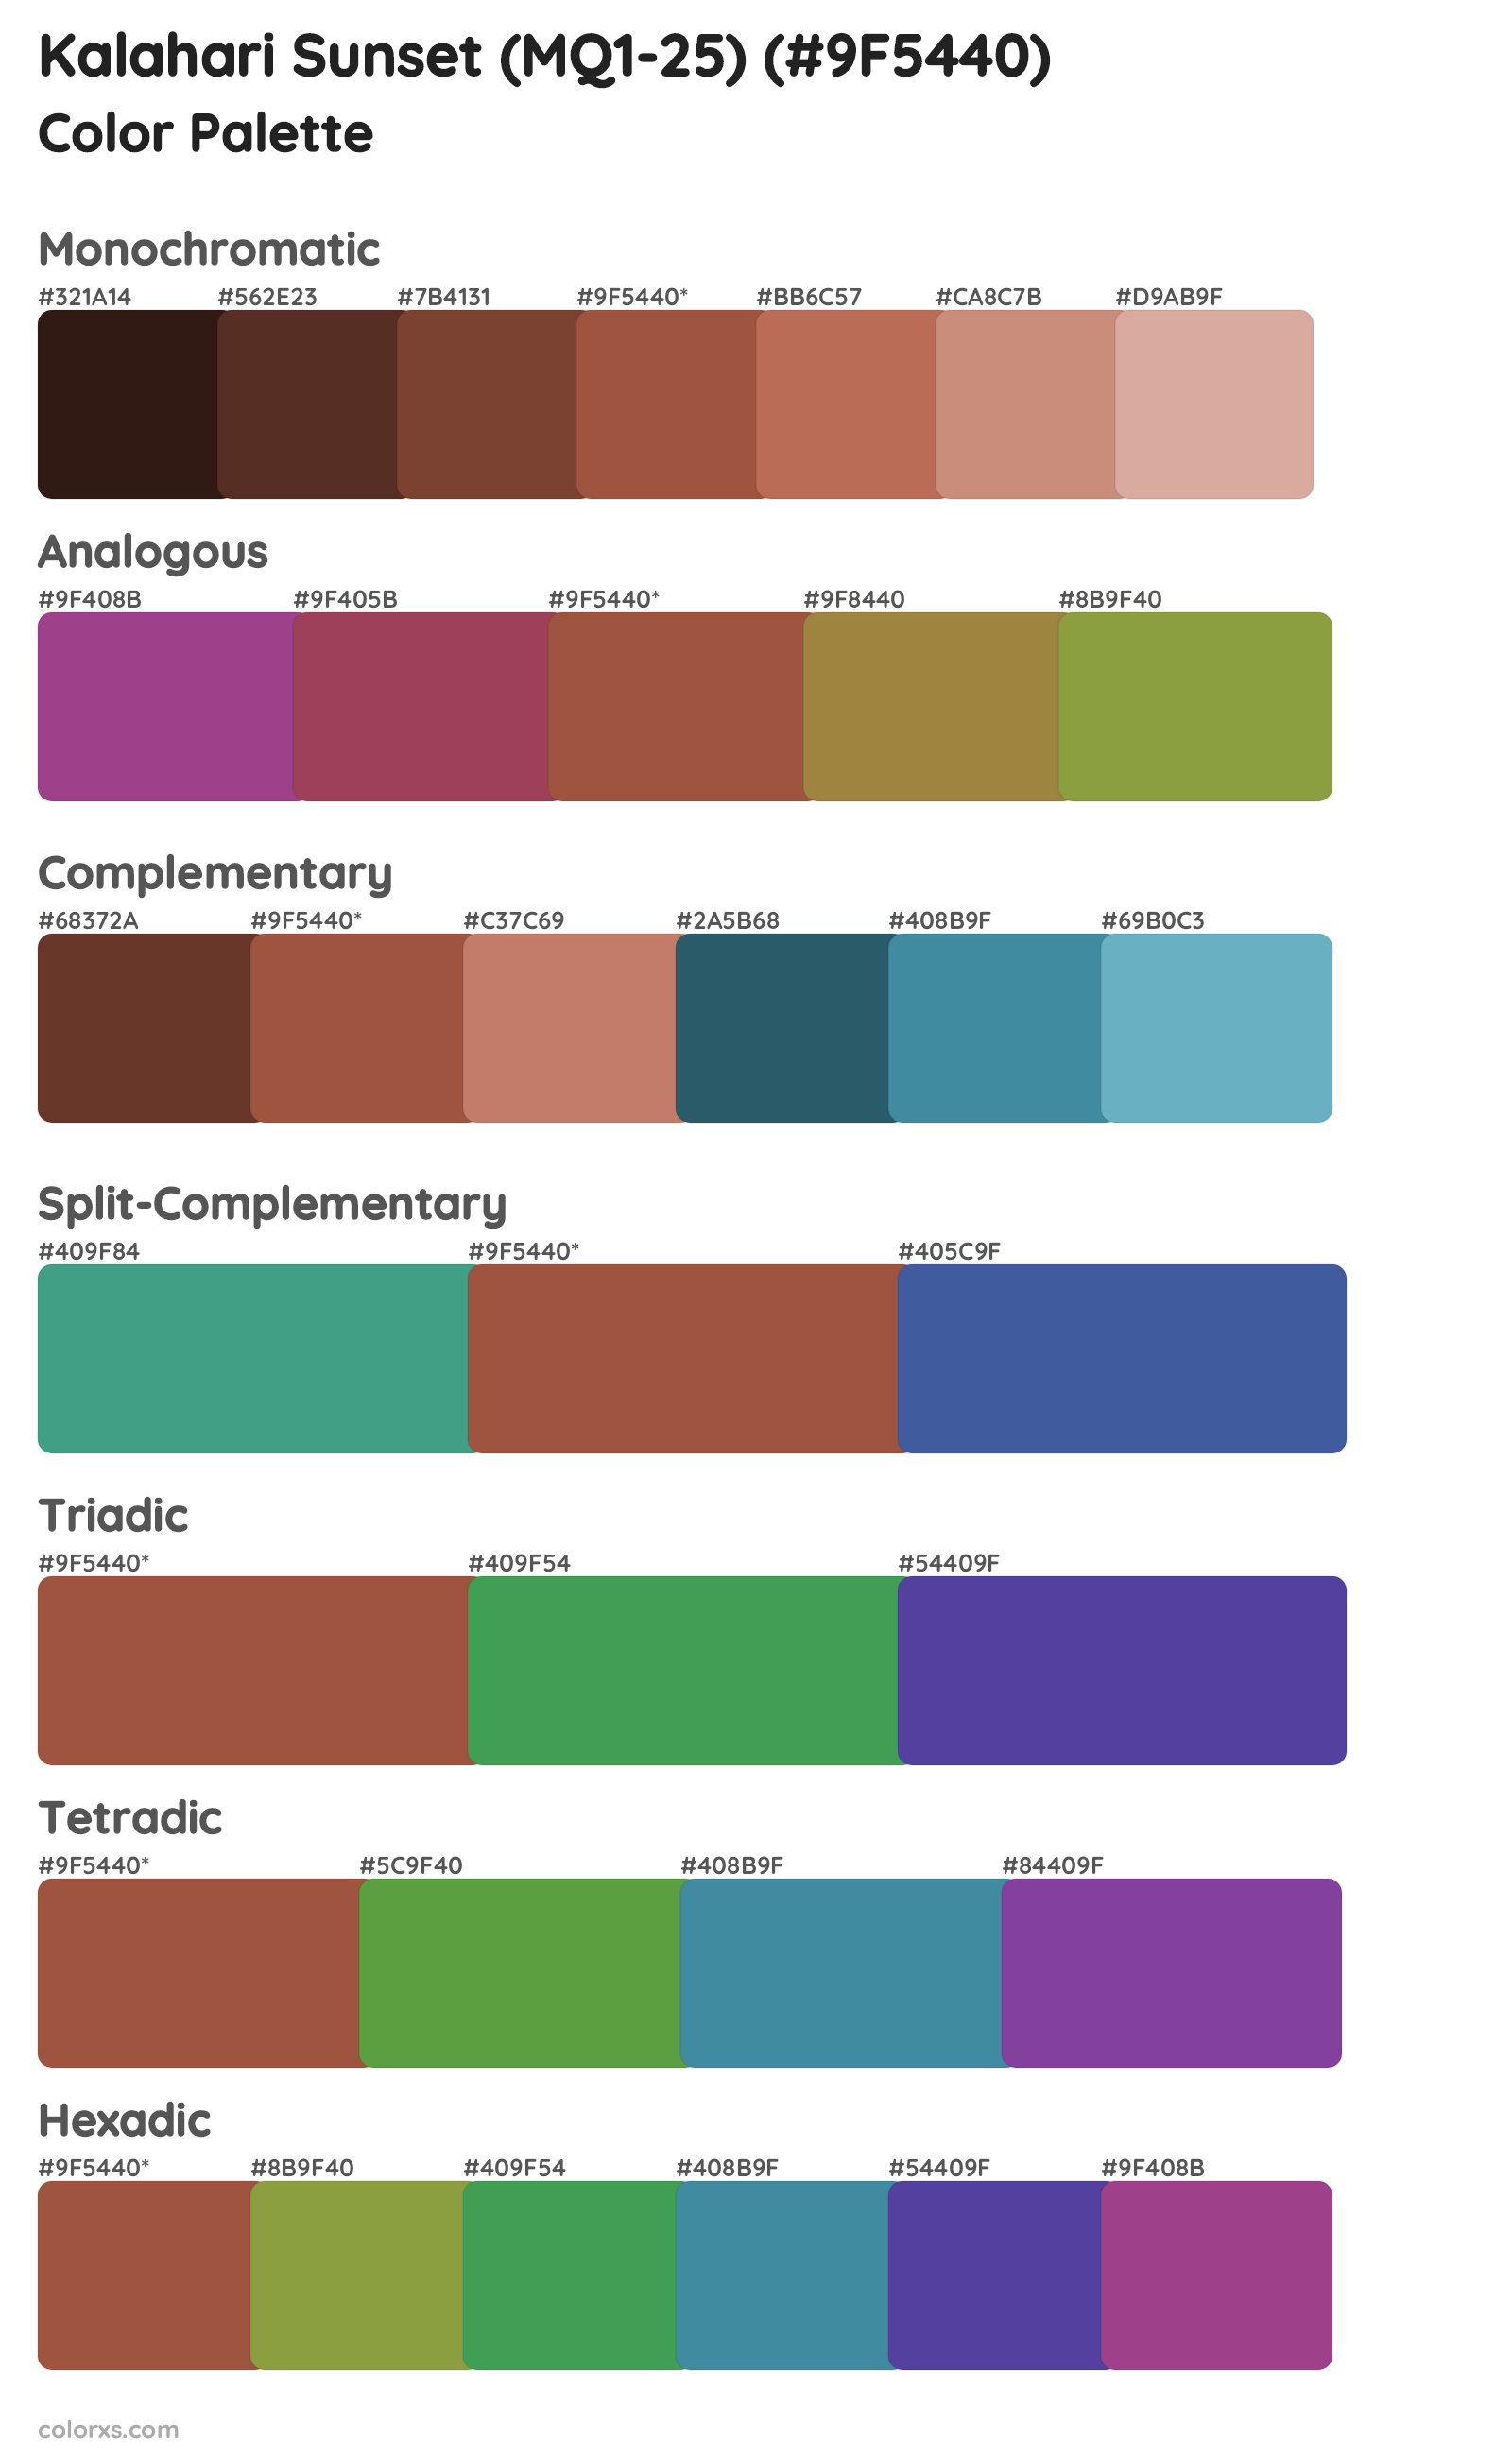 Kalahari Sunset (MQ1-25) Color Scheme Palettes